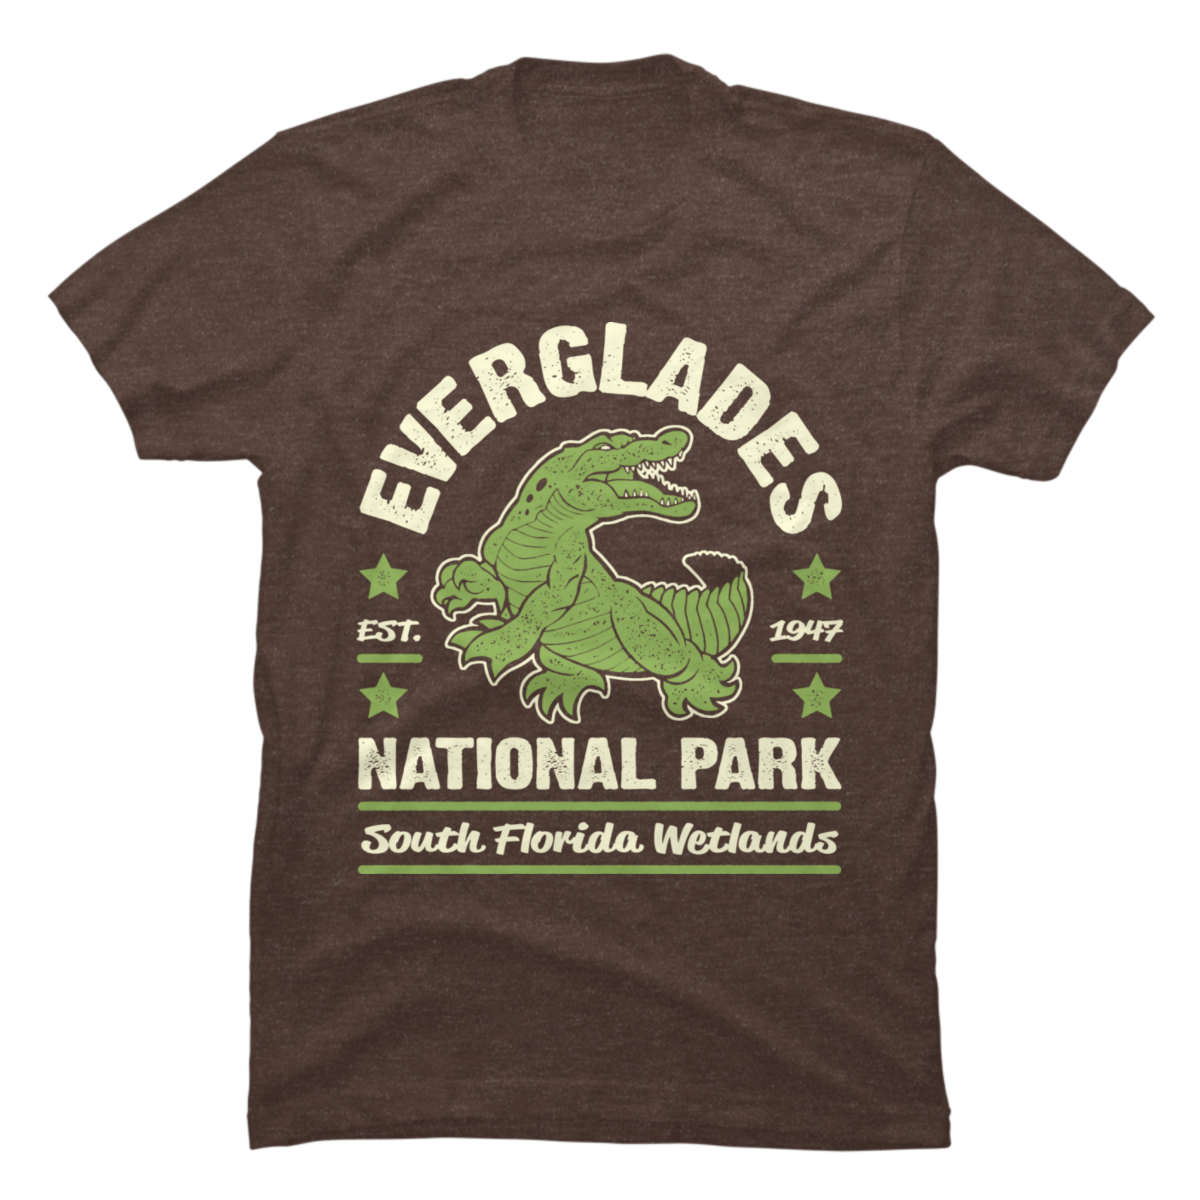 everglades national park t shirts